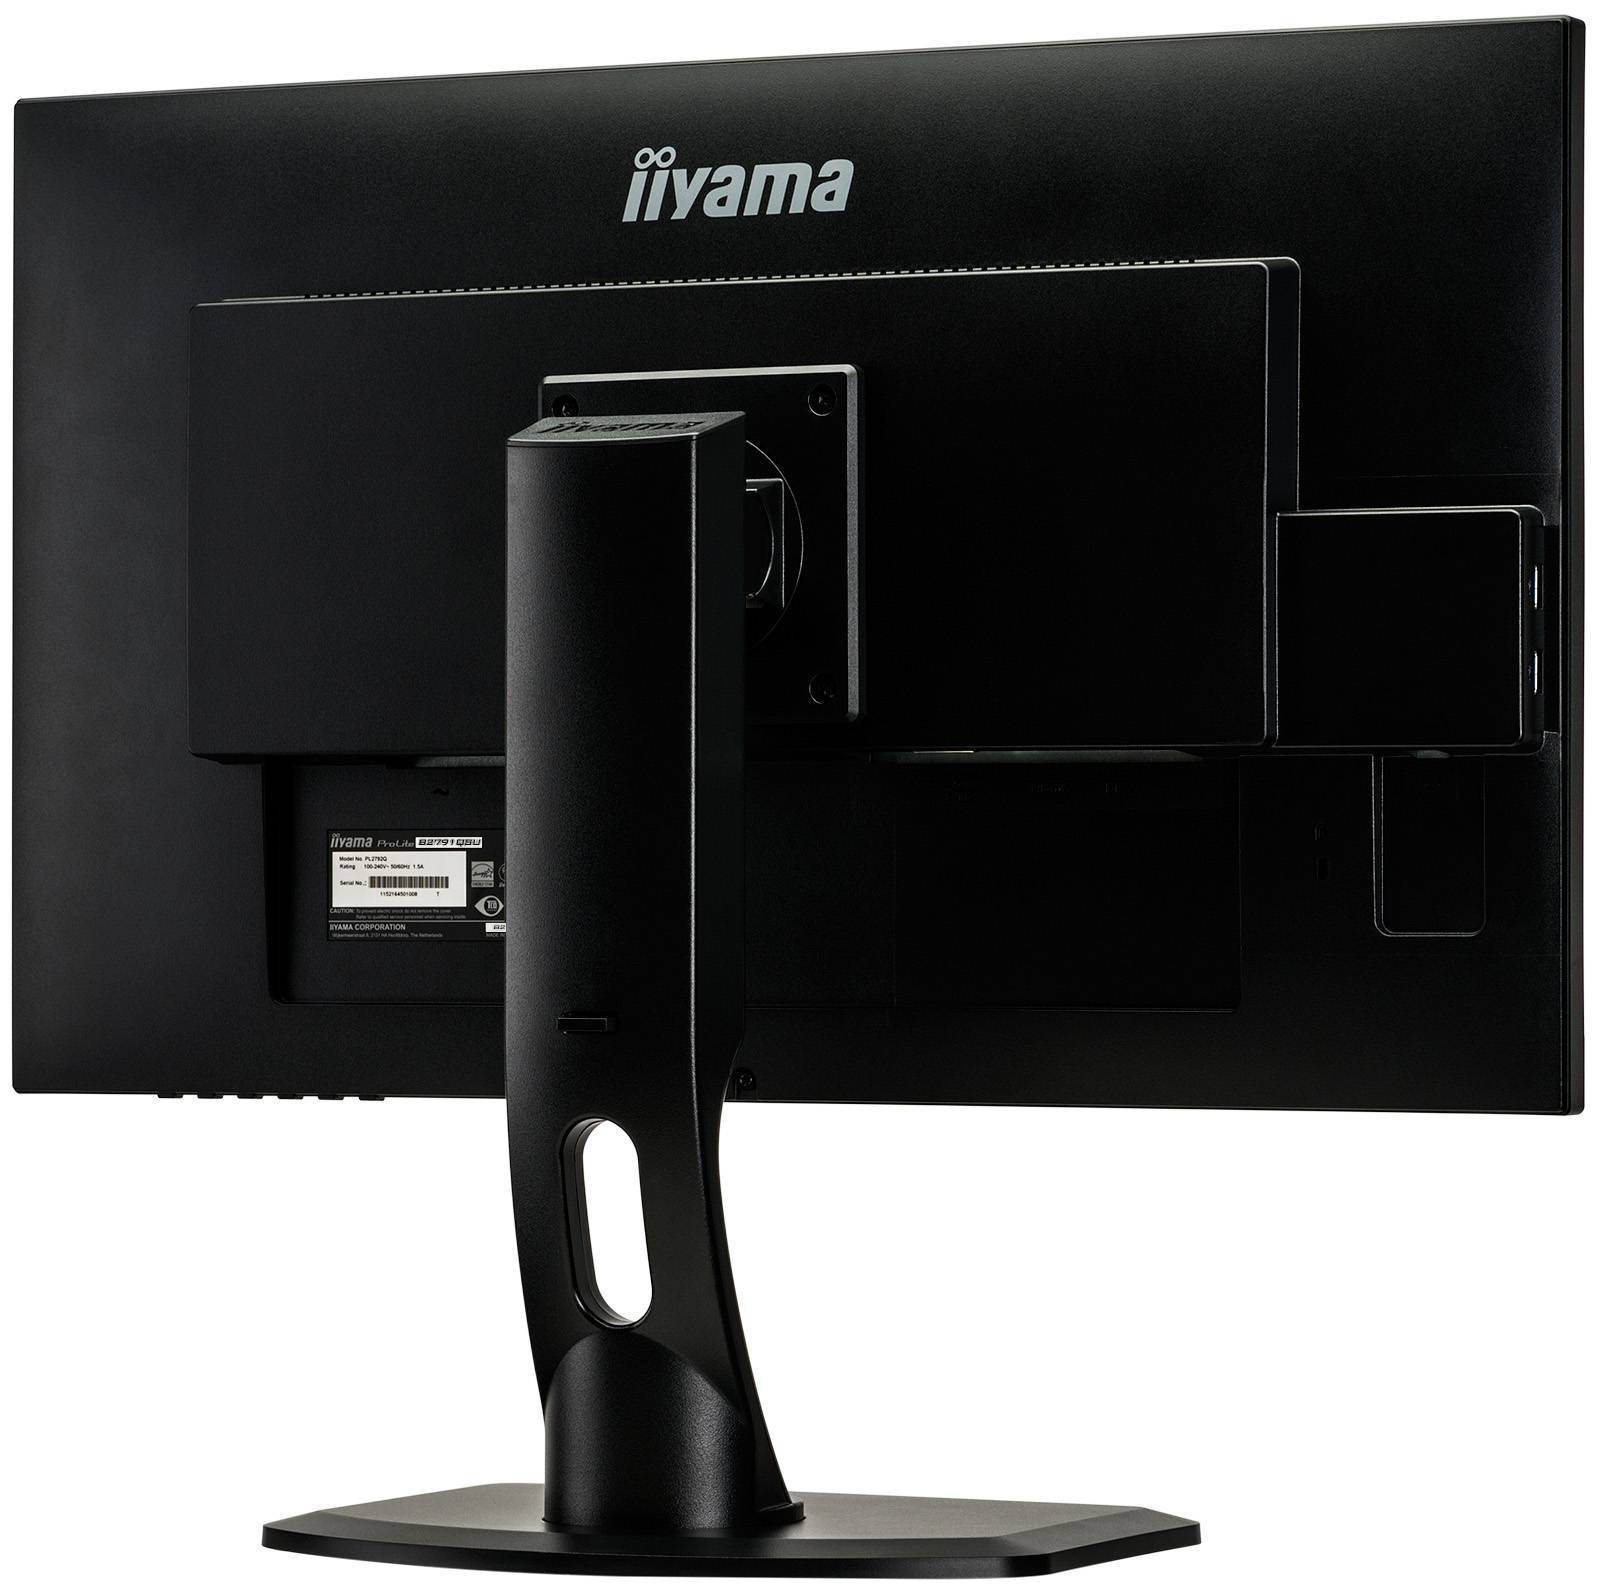 Rca Informatique - image du produit : B2791QSU-B1 1000:1 DVI HDMI DP 27IN LCD 2560 X 1440 16:9 1MS